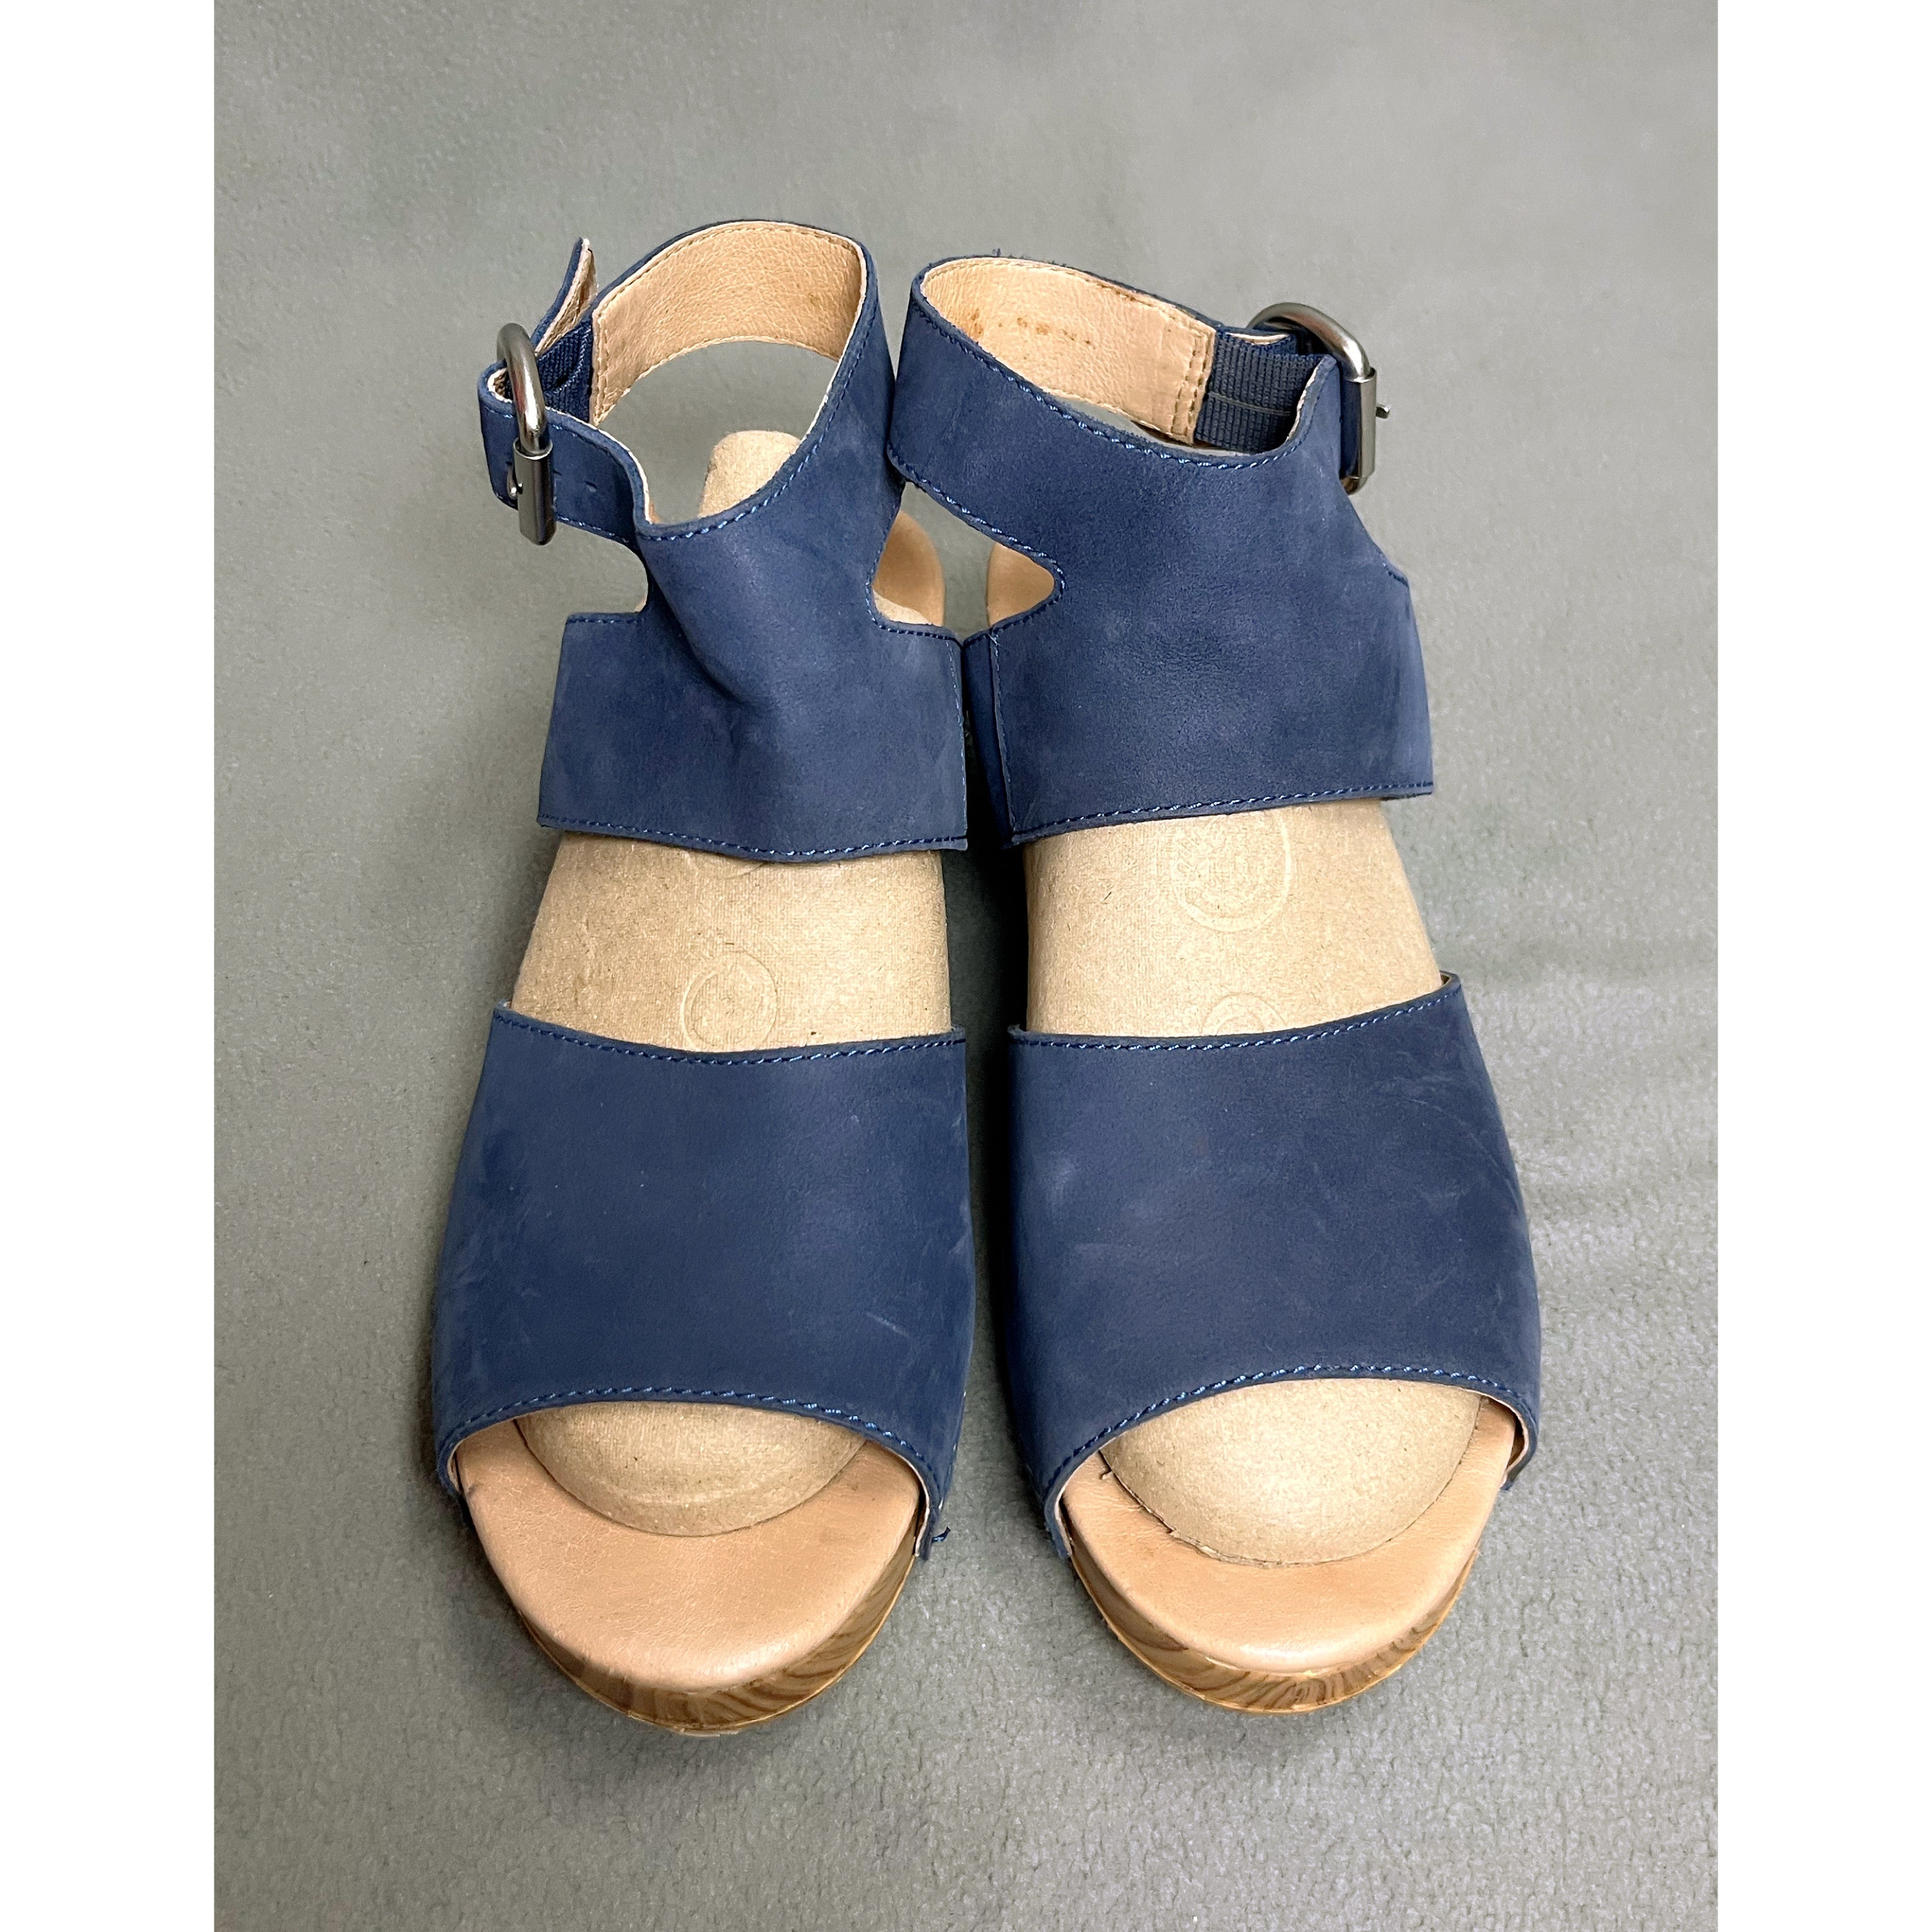 Dansko blue Minka sandals, size 8.5/9